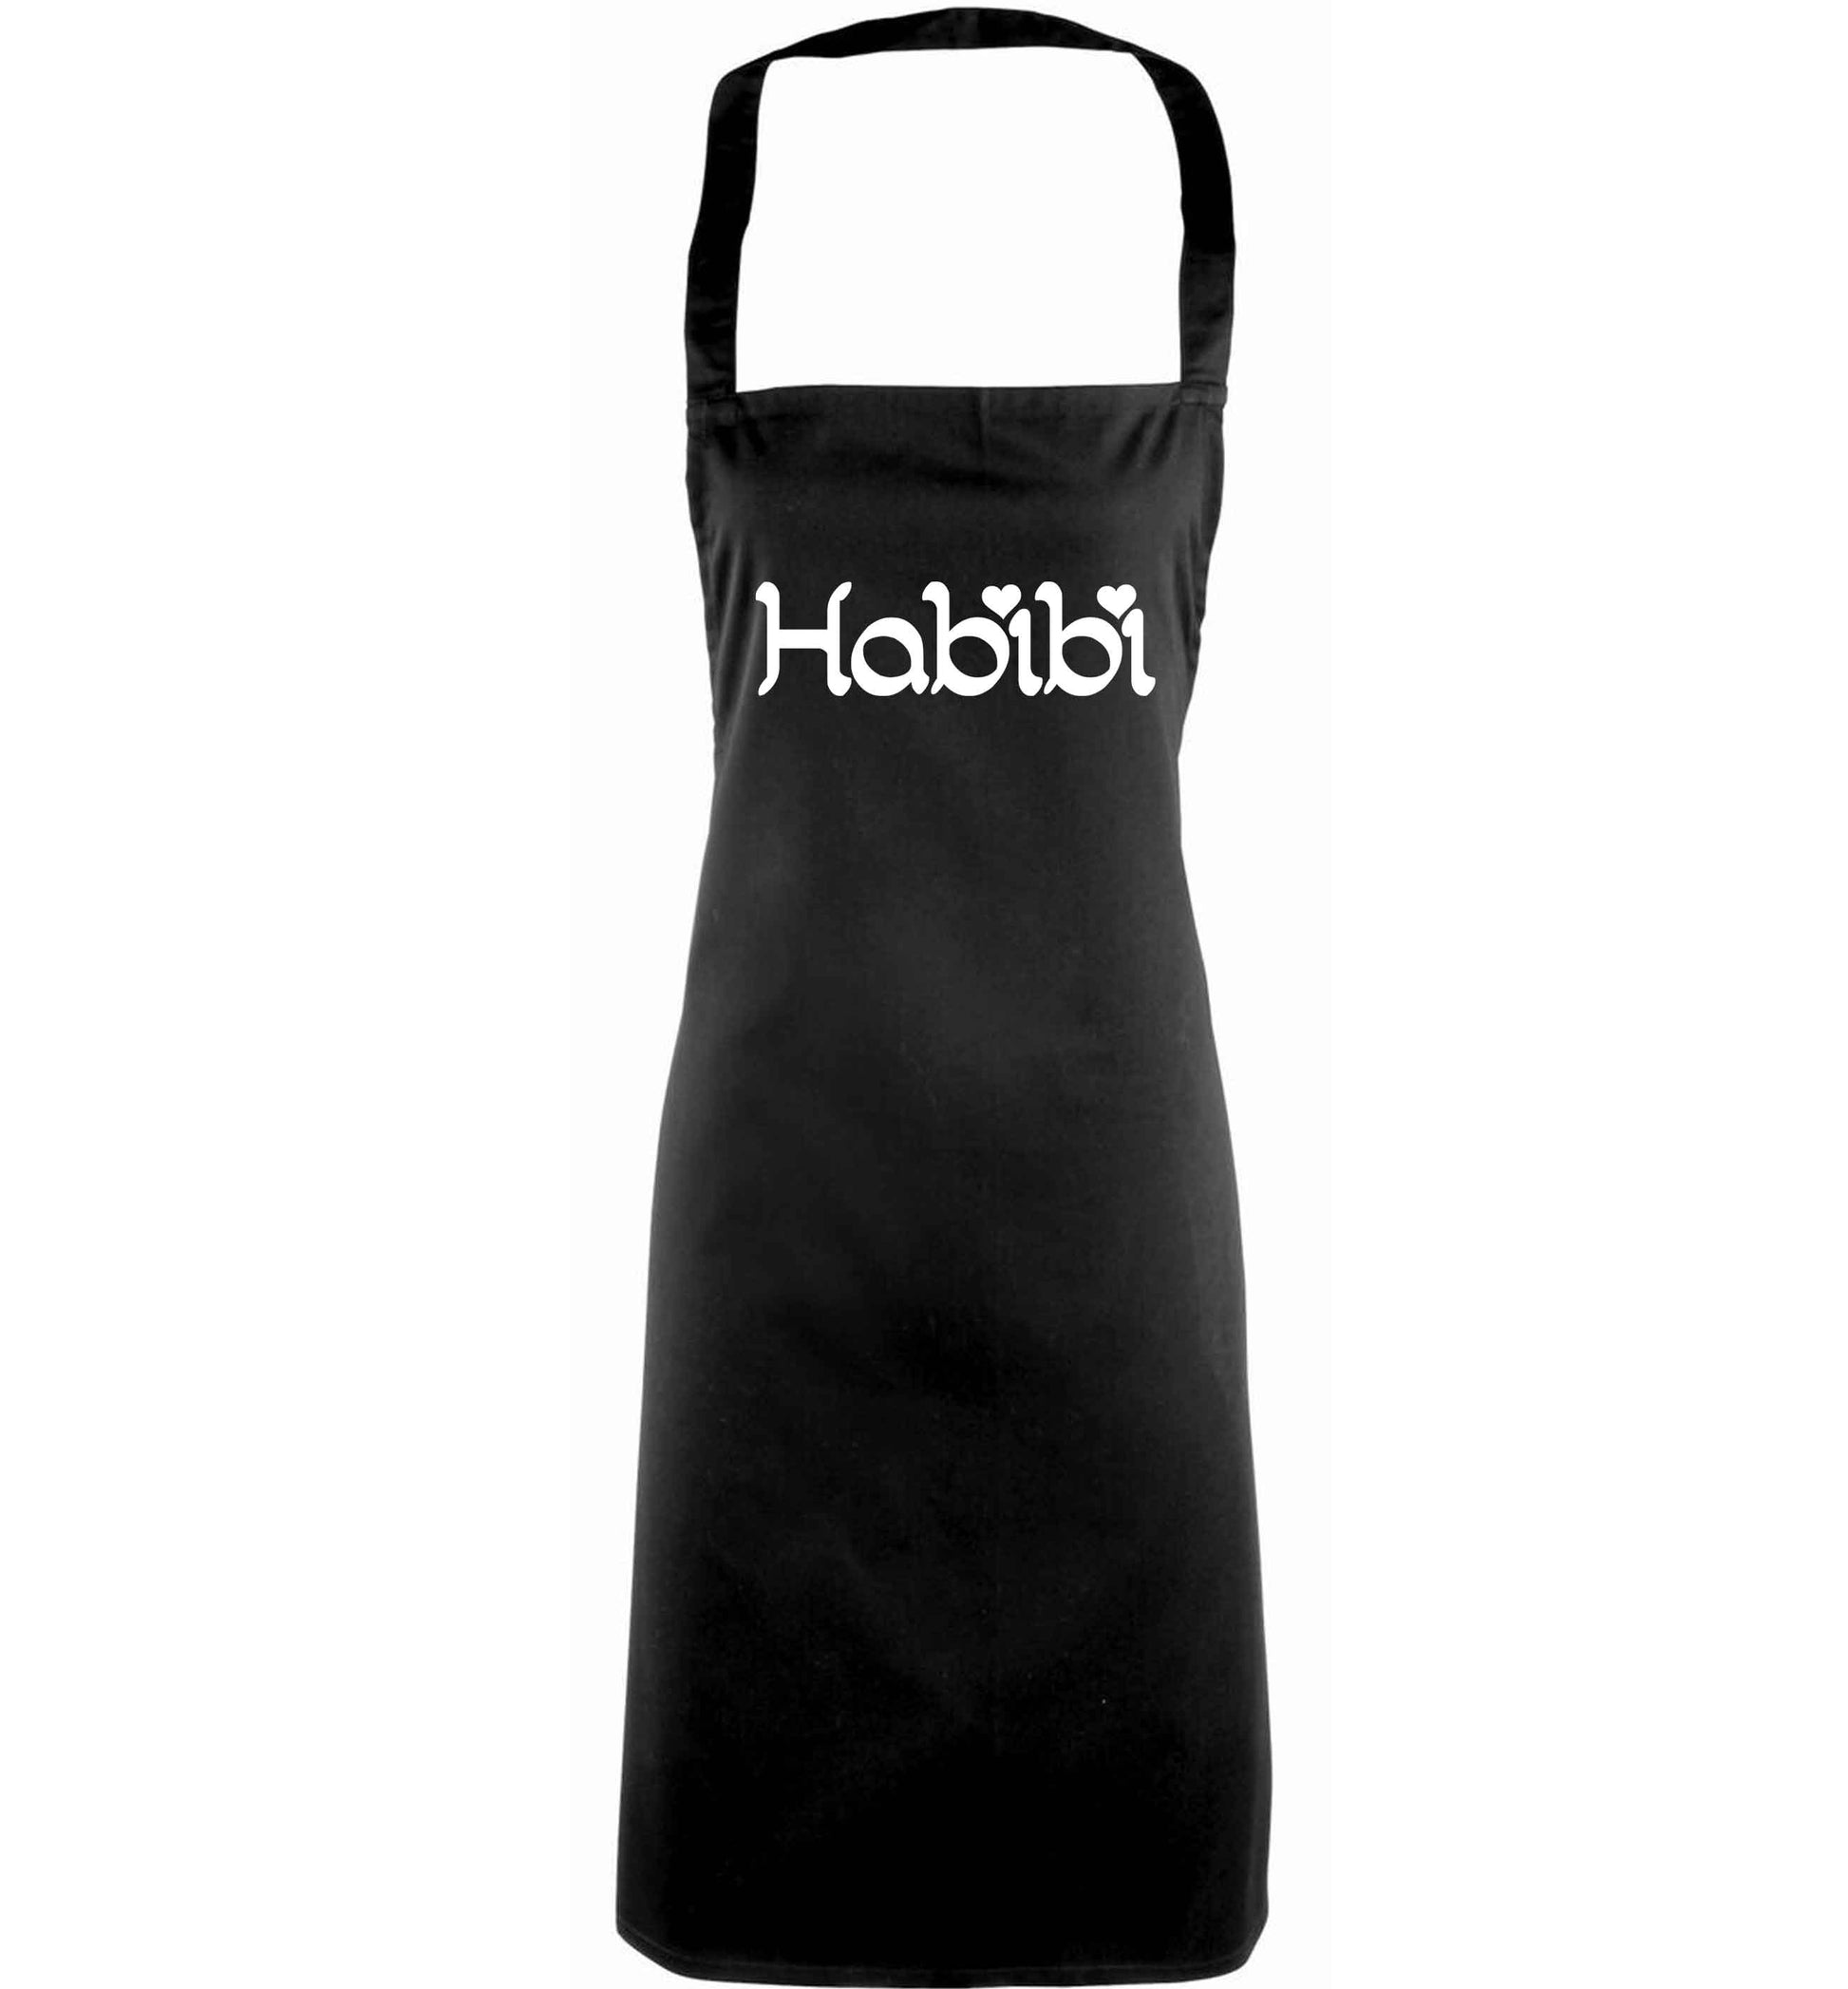 Habibi adults black apron